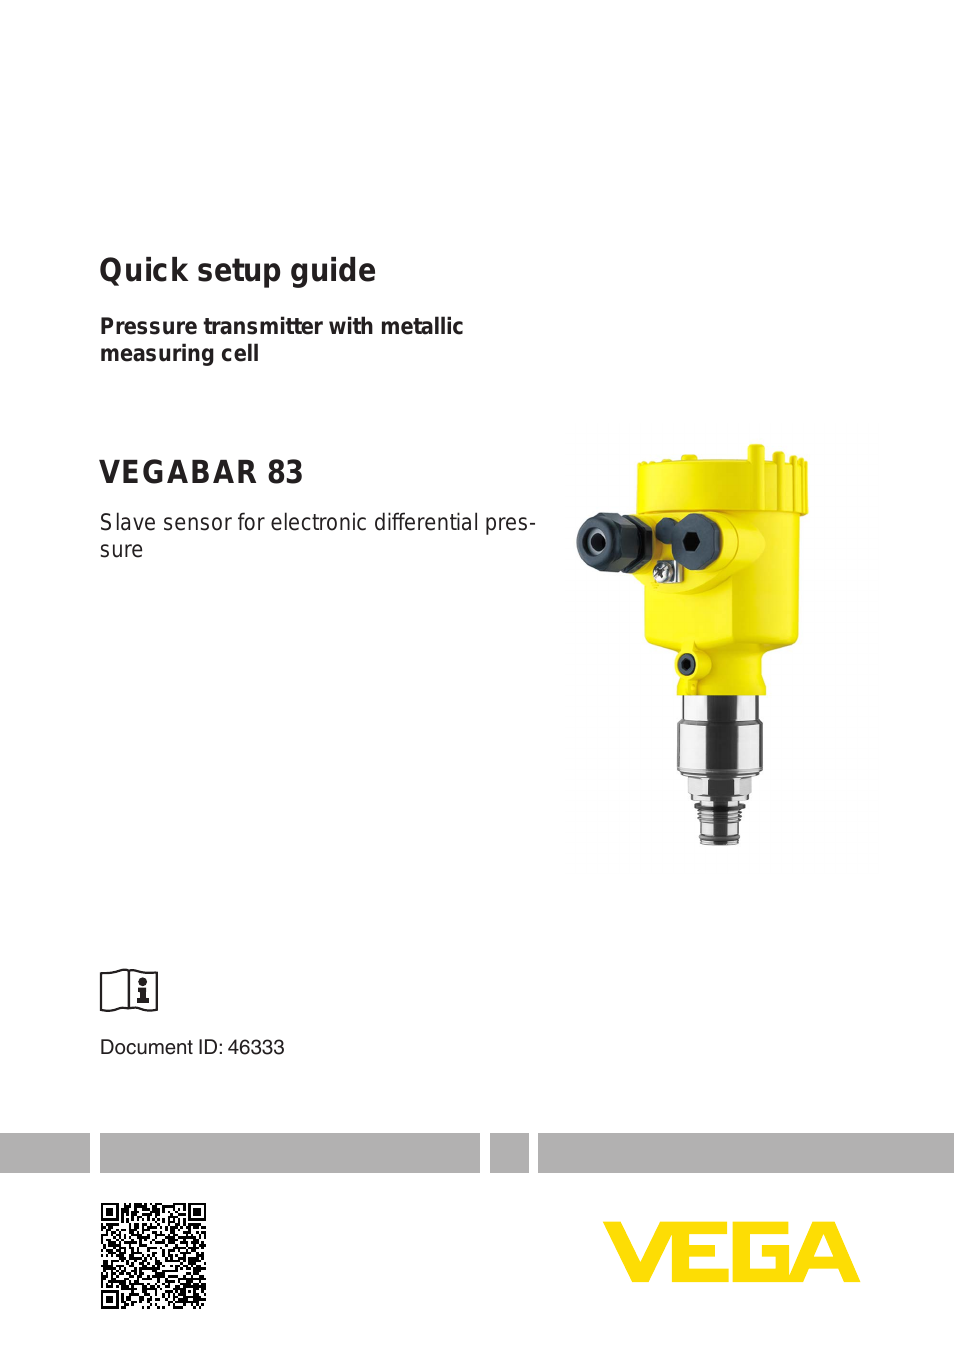 VEGABAR 83 Save sensor - Quick setup guide